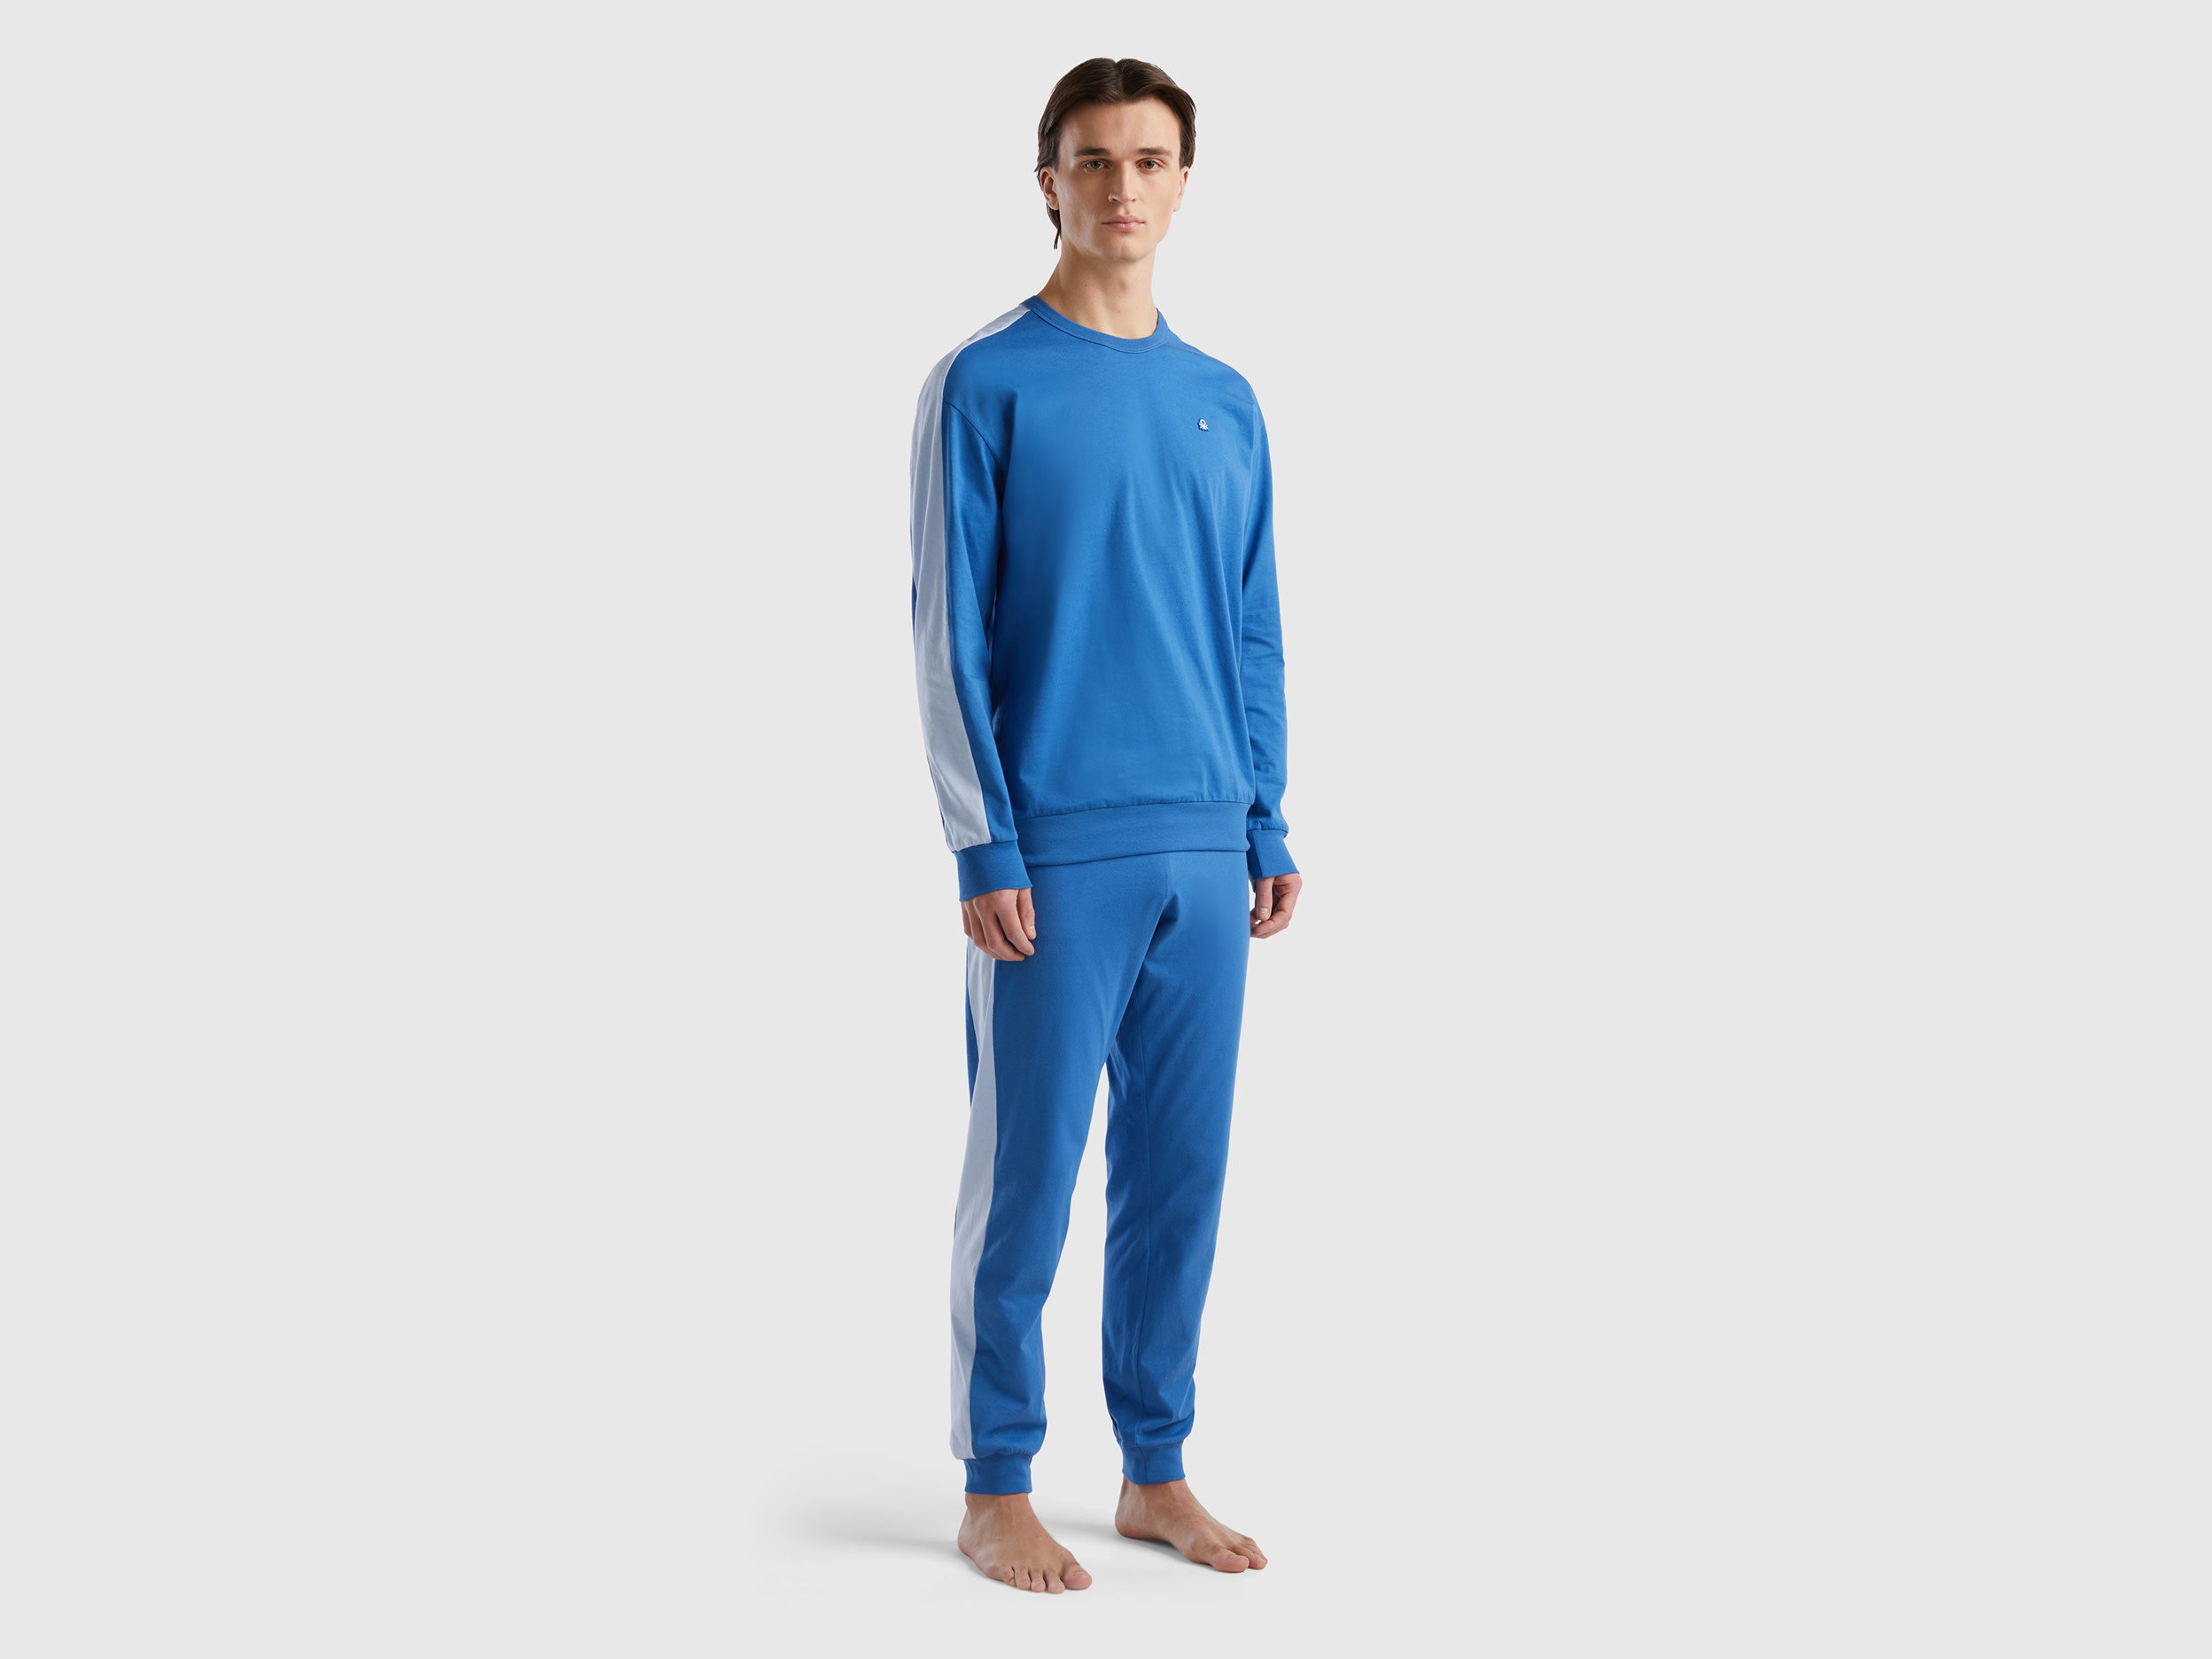 Benetton, Pyjamas With Side Stripes, size L, Blue, Men